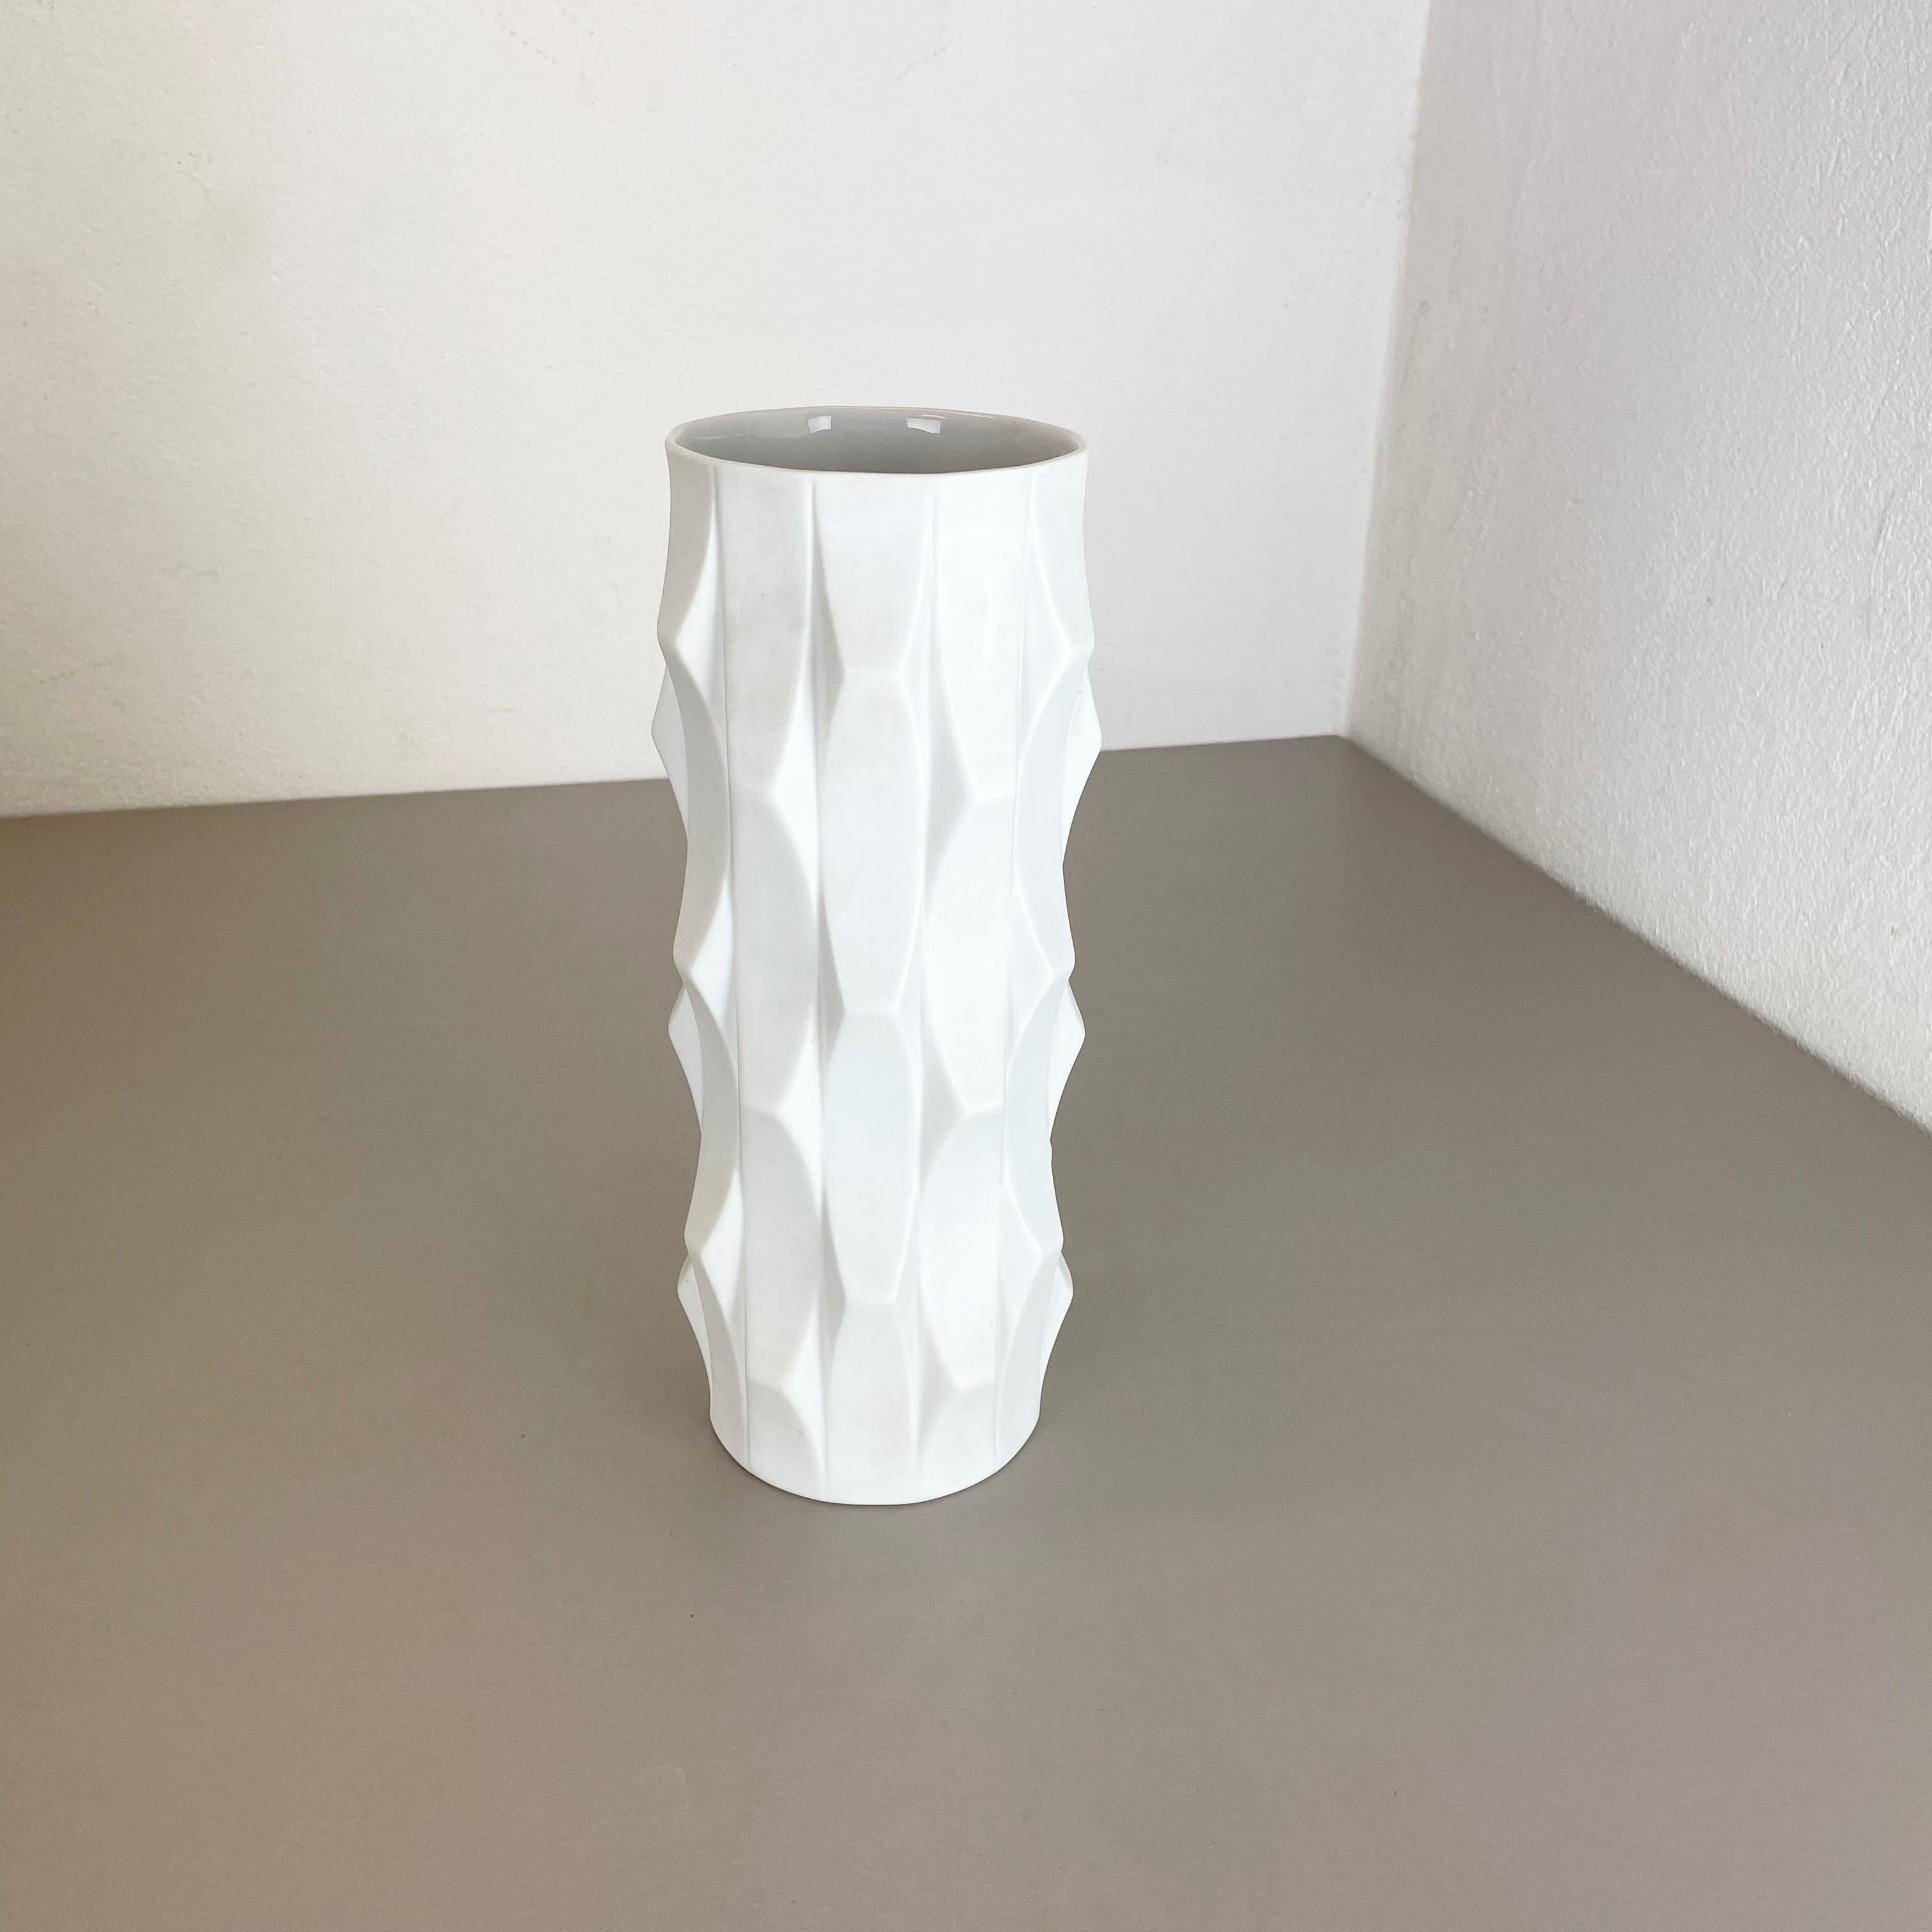 Article:

OP art porcelain vase


Producer:

Hutschenreuther, Germany


Designer:

Heinrich Fuchs



Decade:

1970s



Description:

This original vintage OP Art vase was produced and designed by Heinrich Fuchs in the 1970s